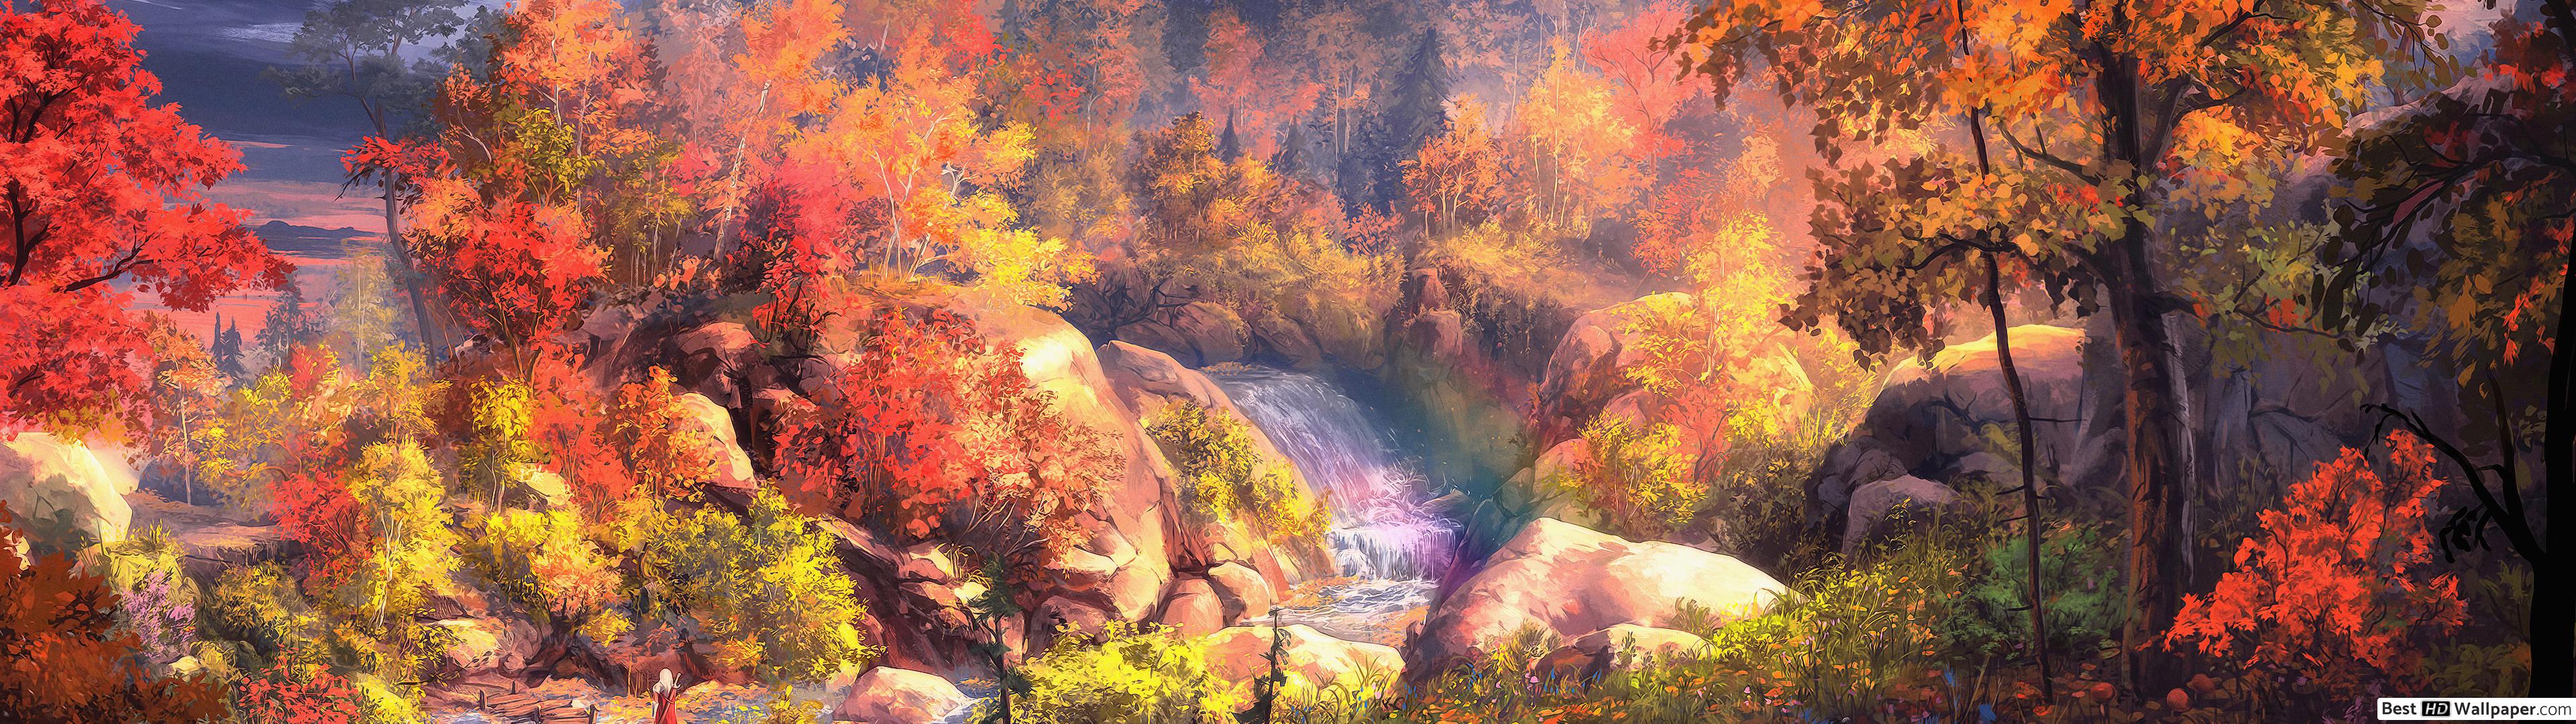 Misty Autumn River HD wallpaper download